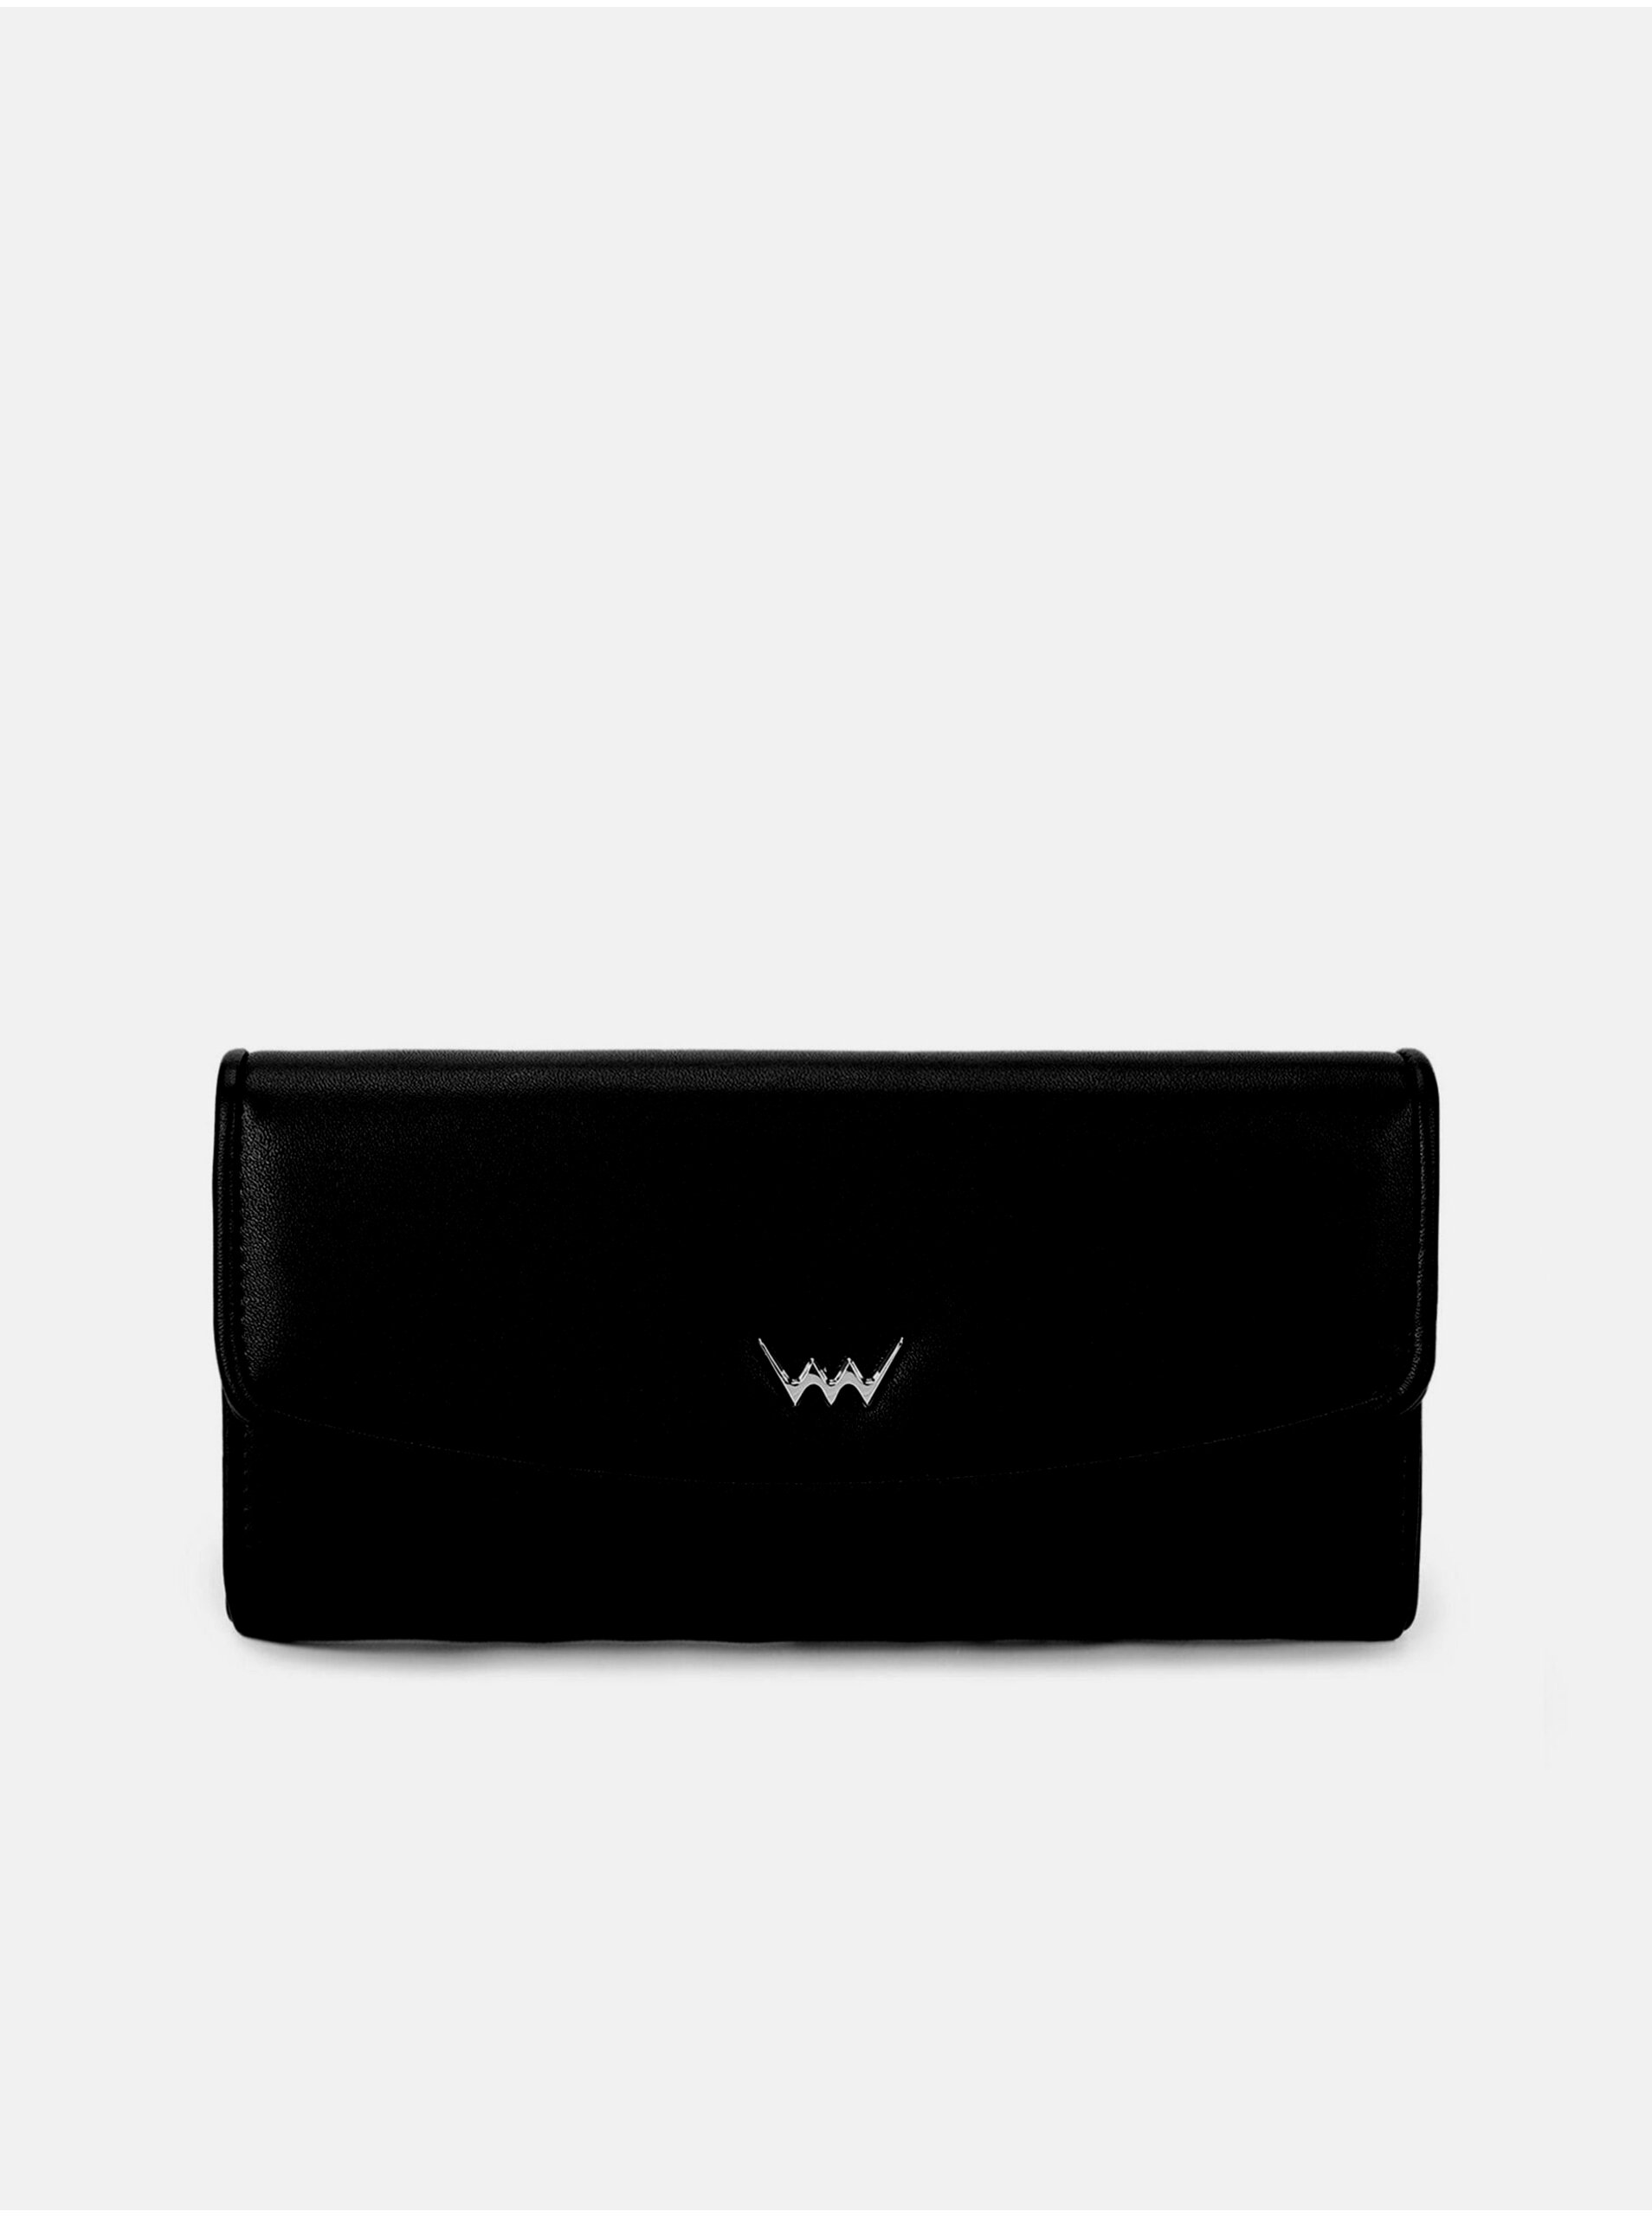 E-shop Černá dámská peněženka s klopou VUCH Alfio Black